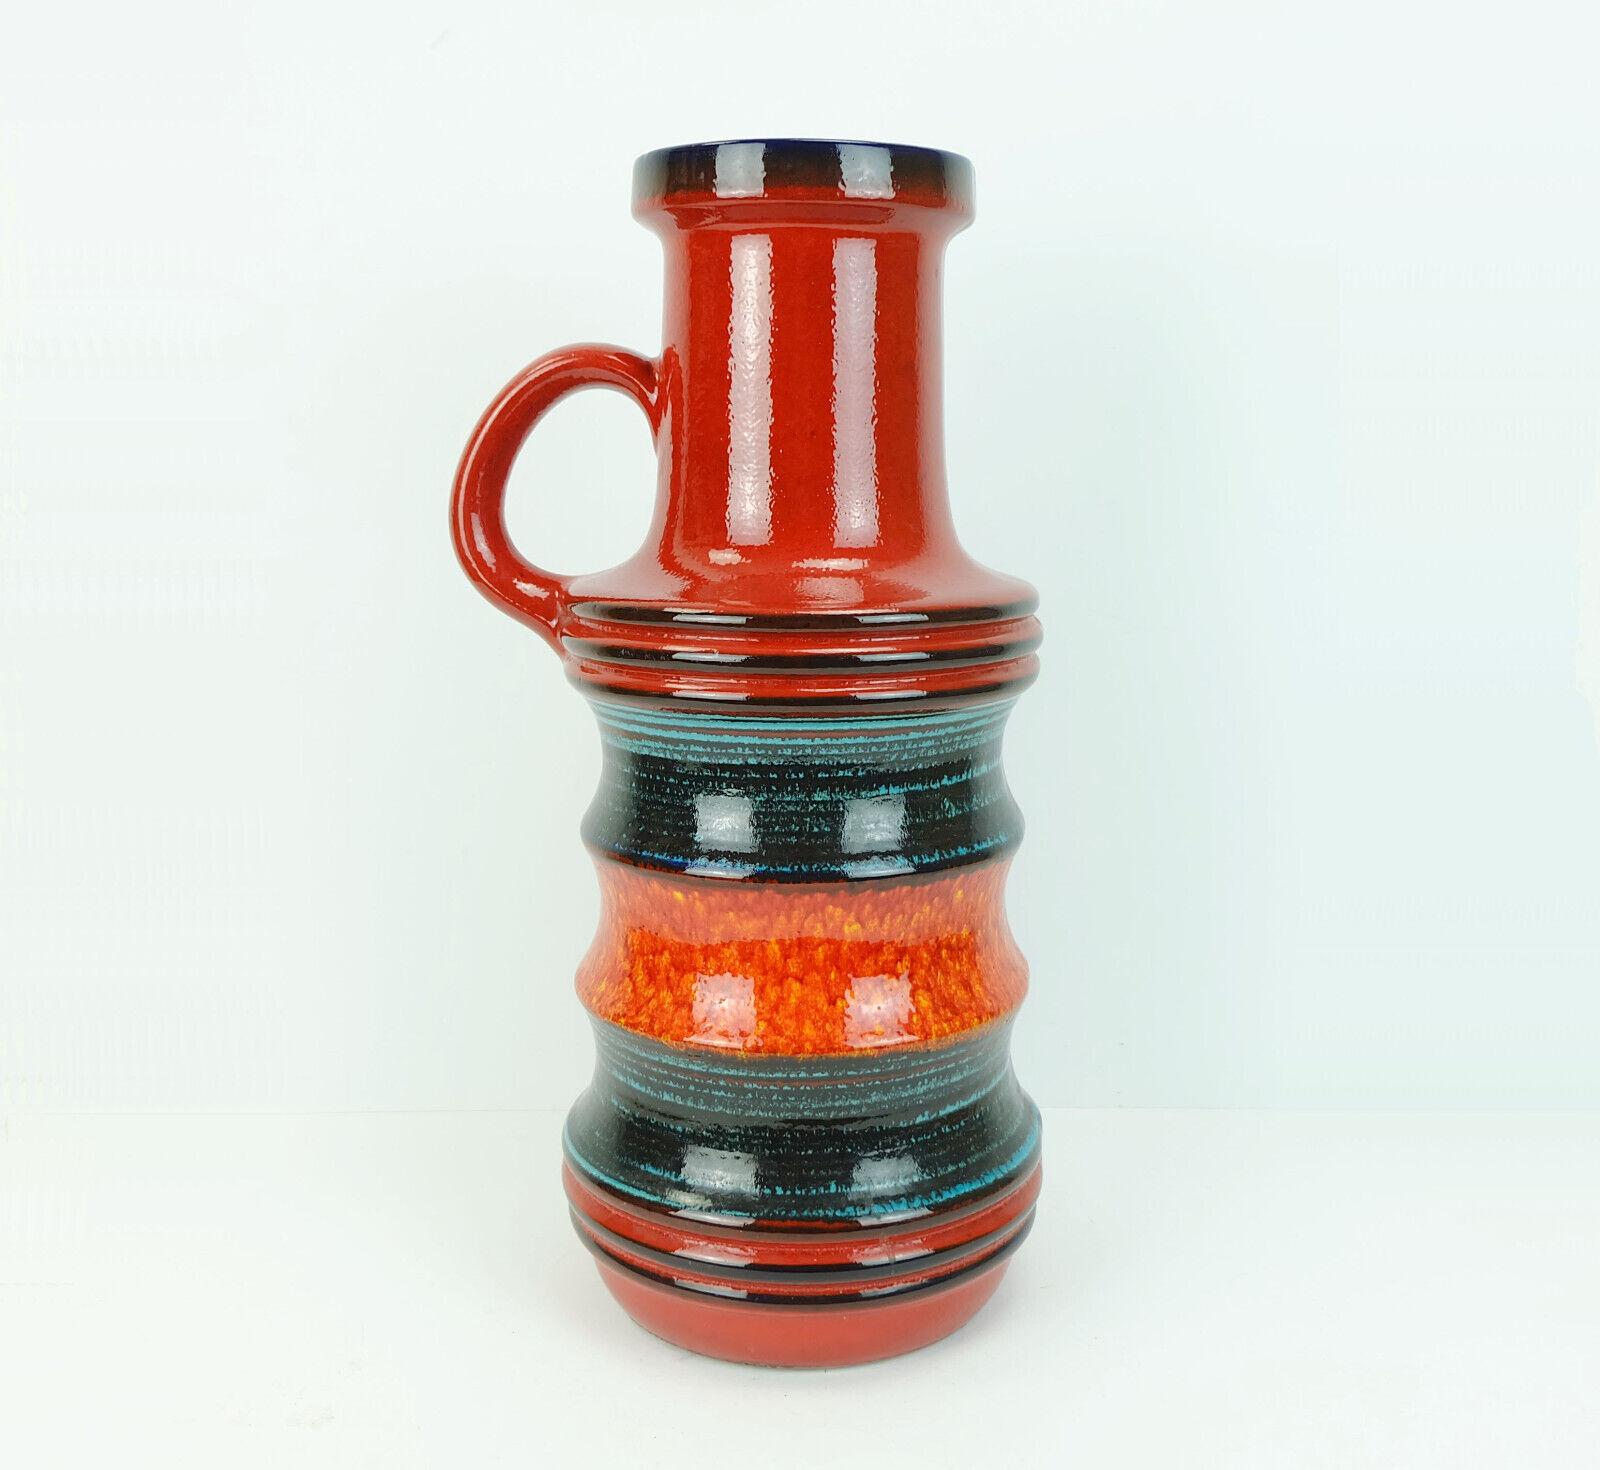 Allemand grand vase scheurich en ceramique modele 427-47 motif stripe rouge orange noir en vente